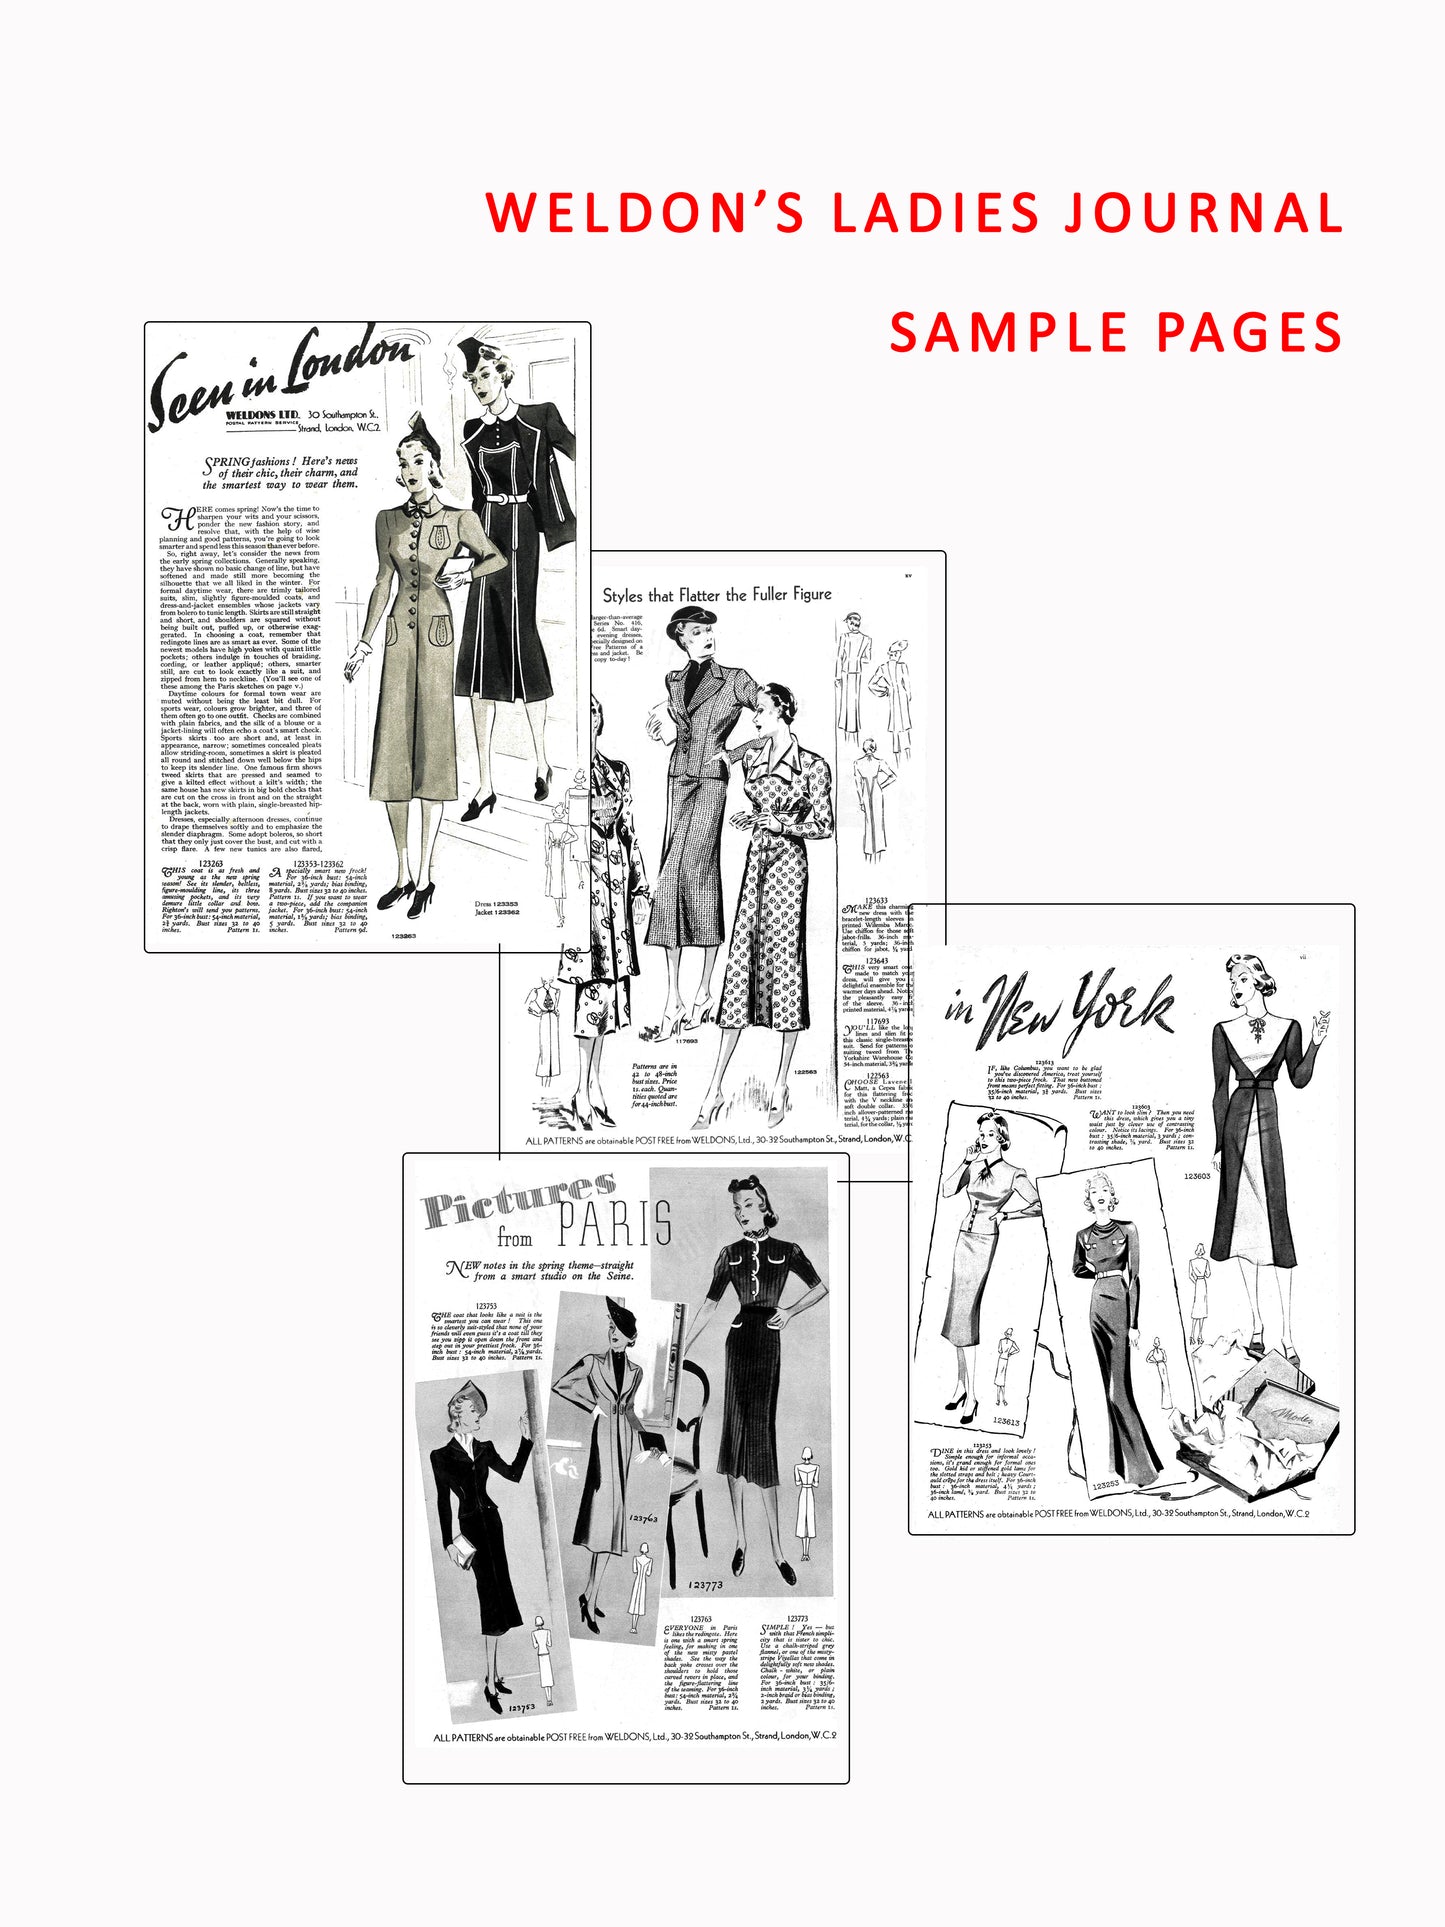 FREE 1930s Weldon's Ladies Journal - Portfolio of Fashions - PDF Download